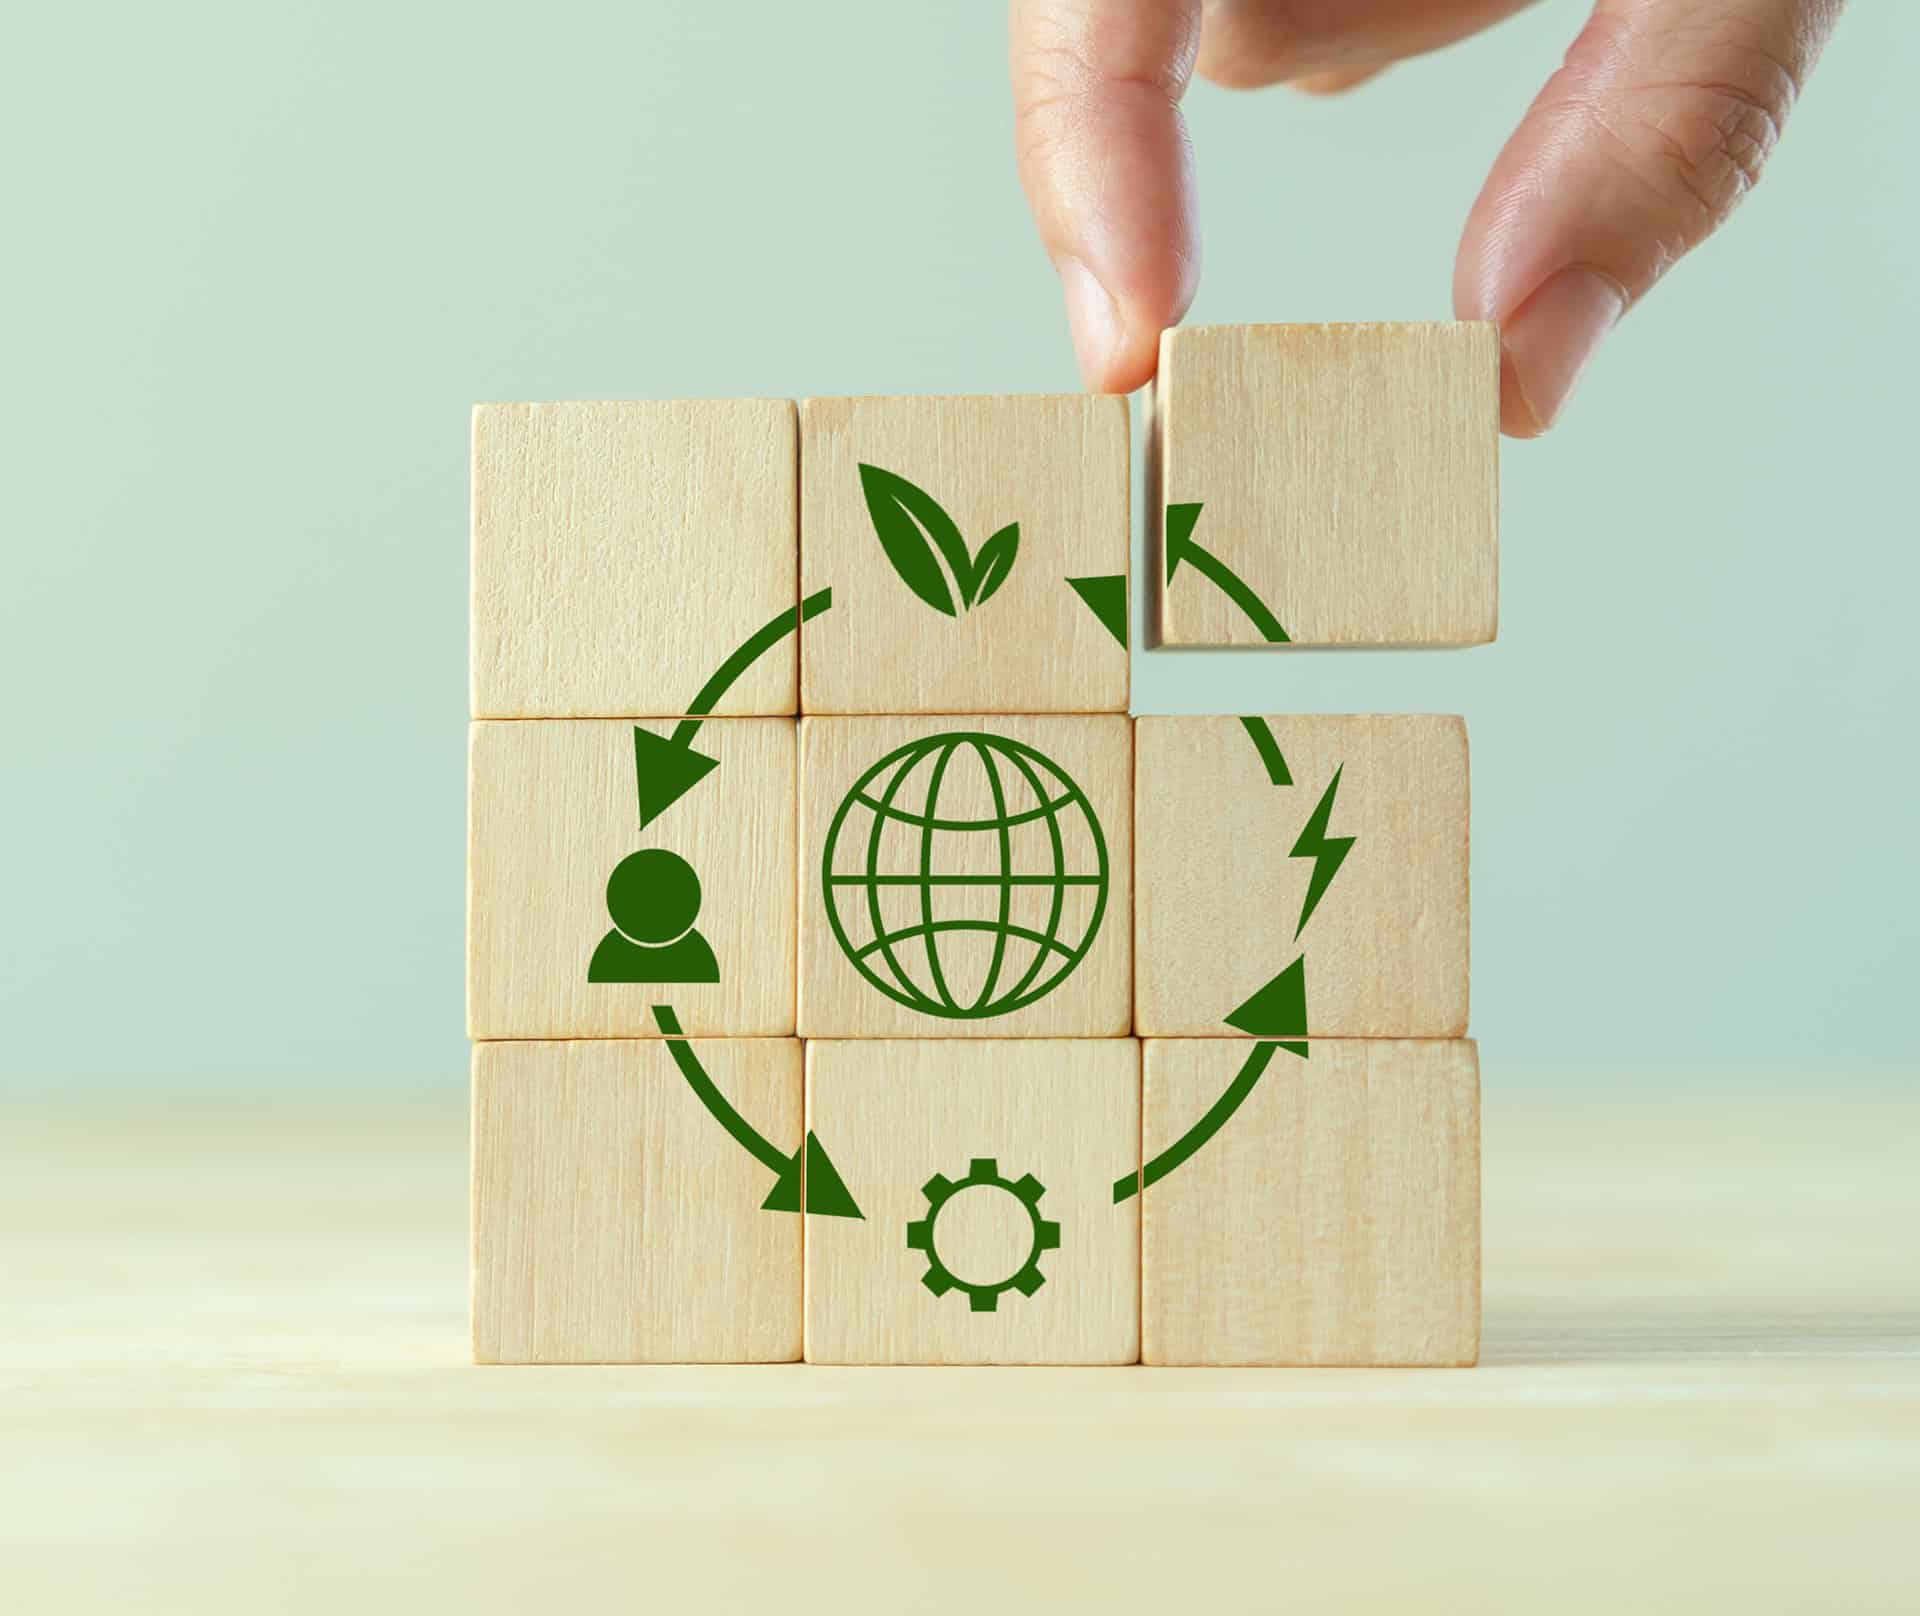 Building blocks of sustainability